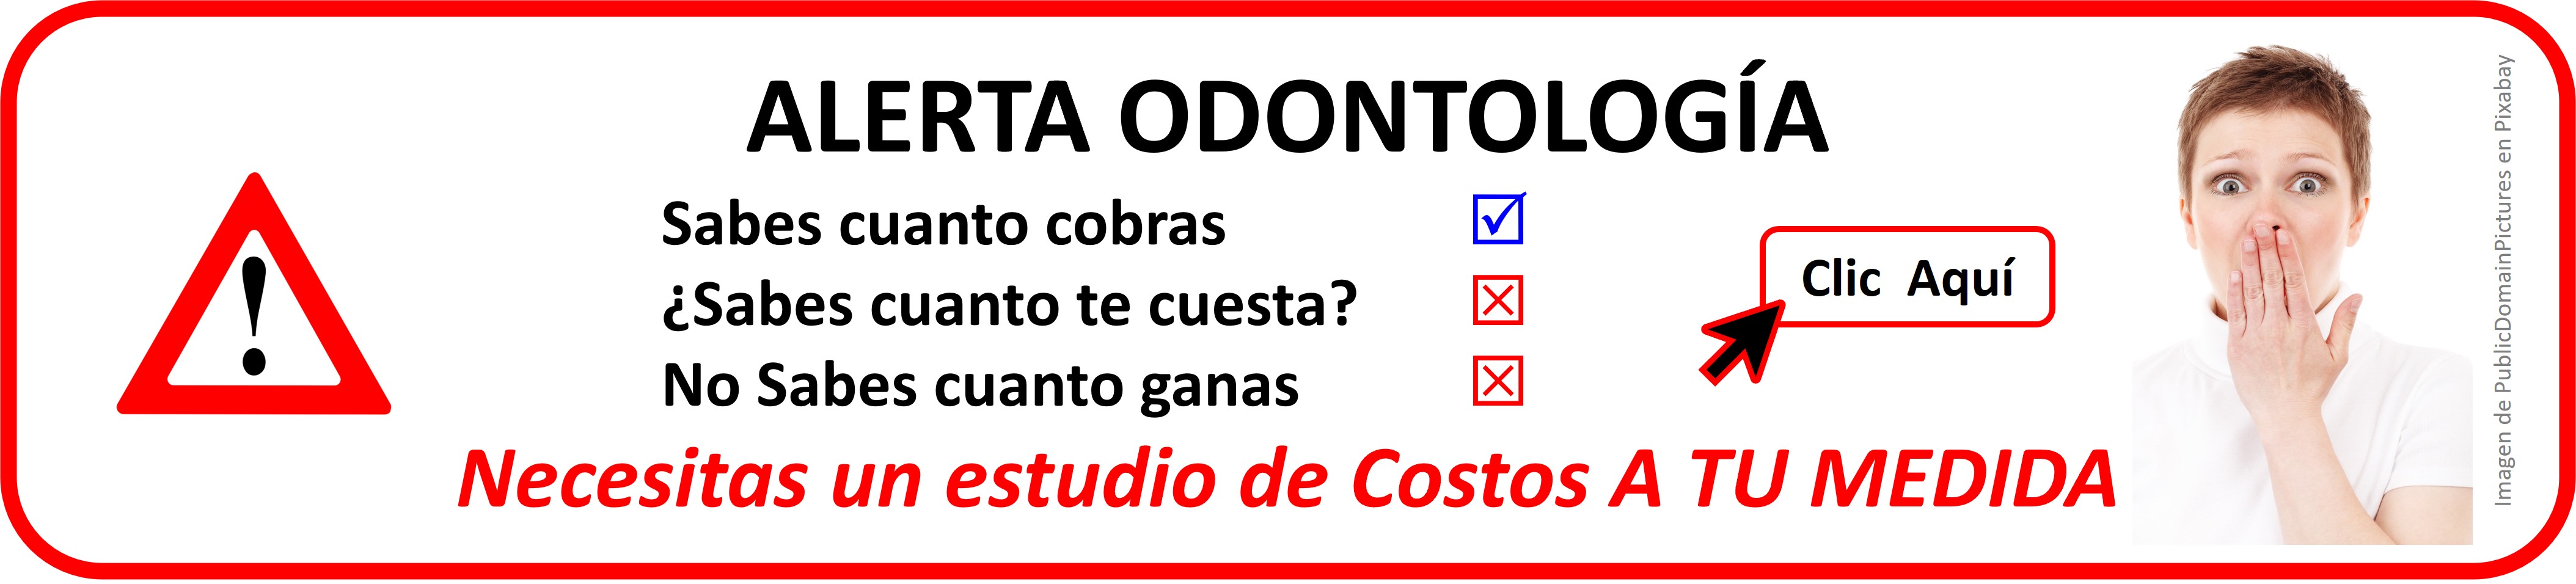 ESTUDIO DE COSTOS ODONTOLOGIA